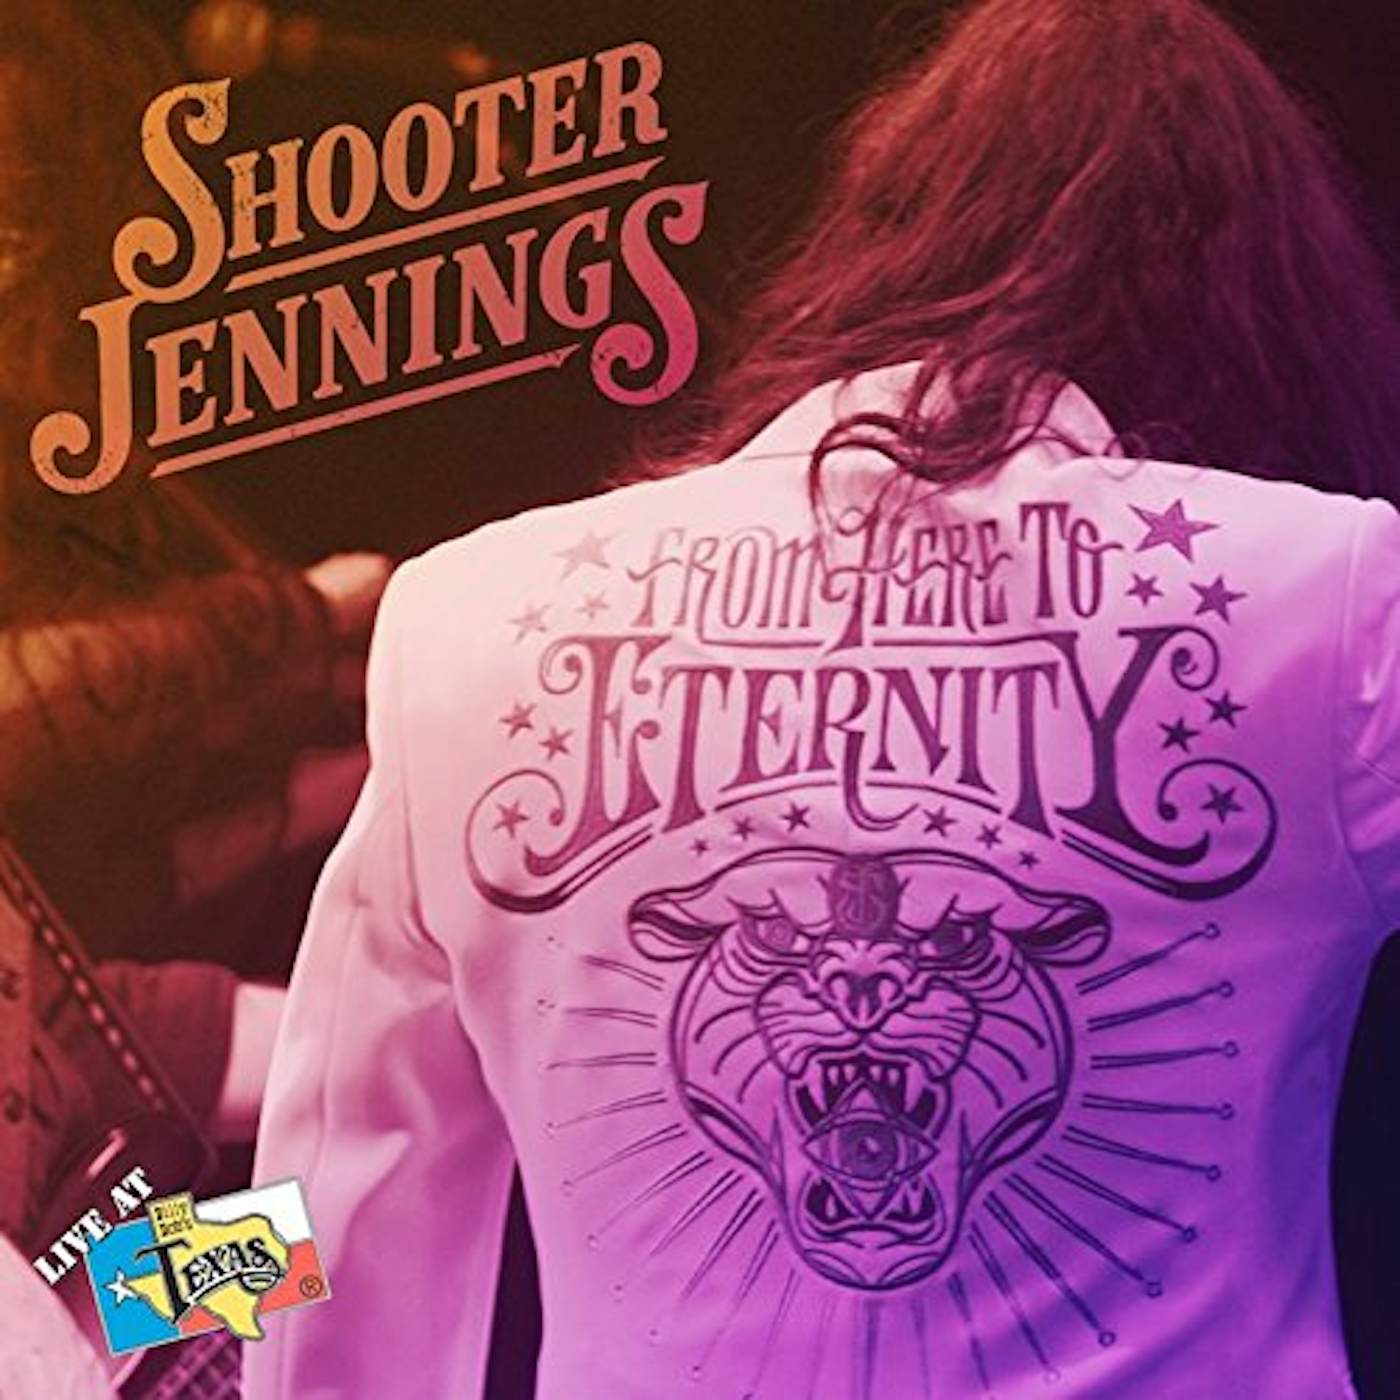 Shooter Jennings LIVE AT BILLY BOB'S TEXAS CD